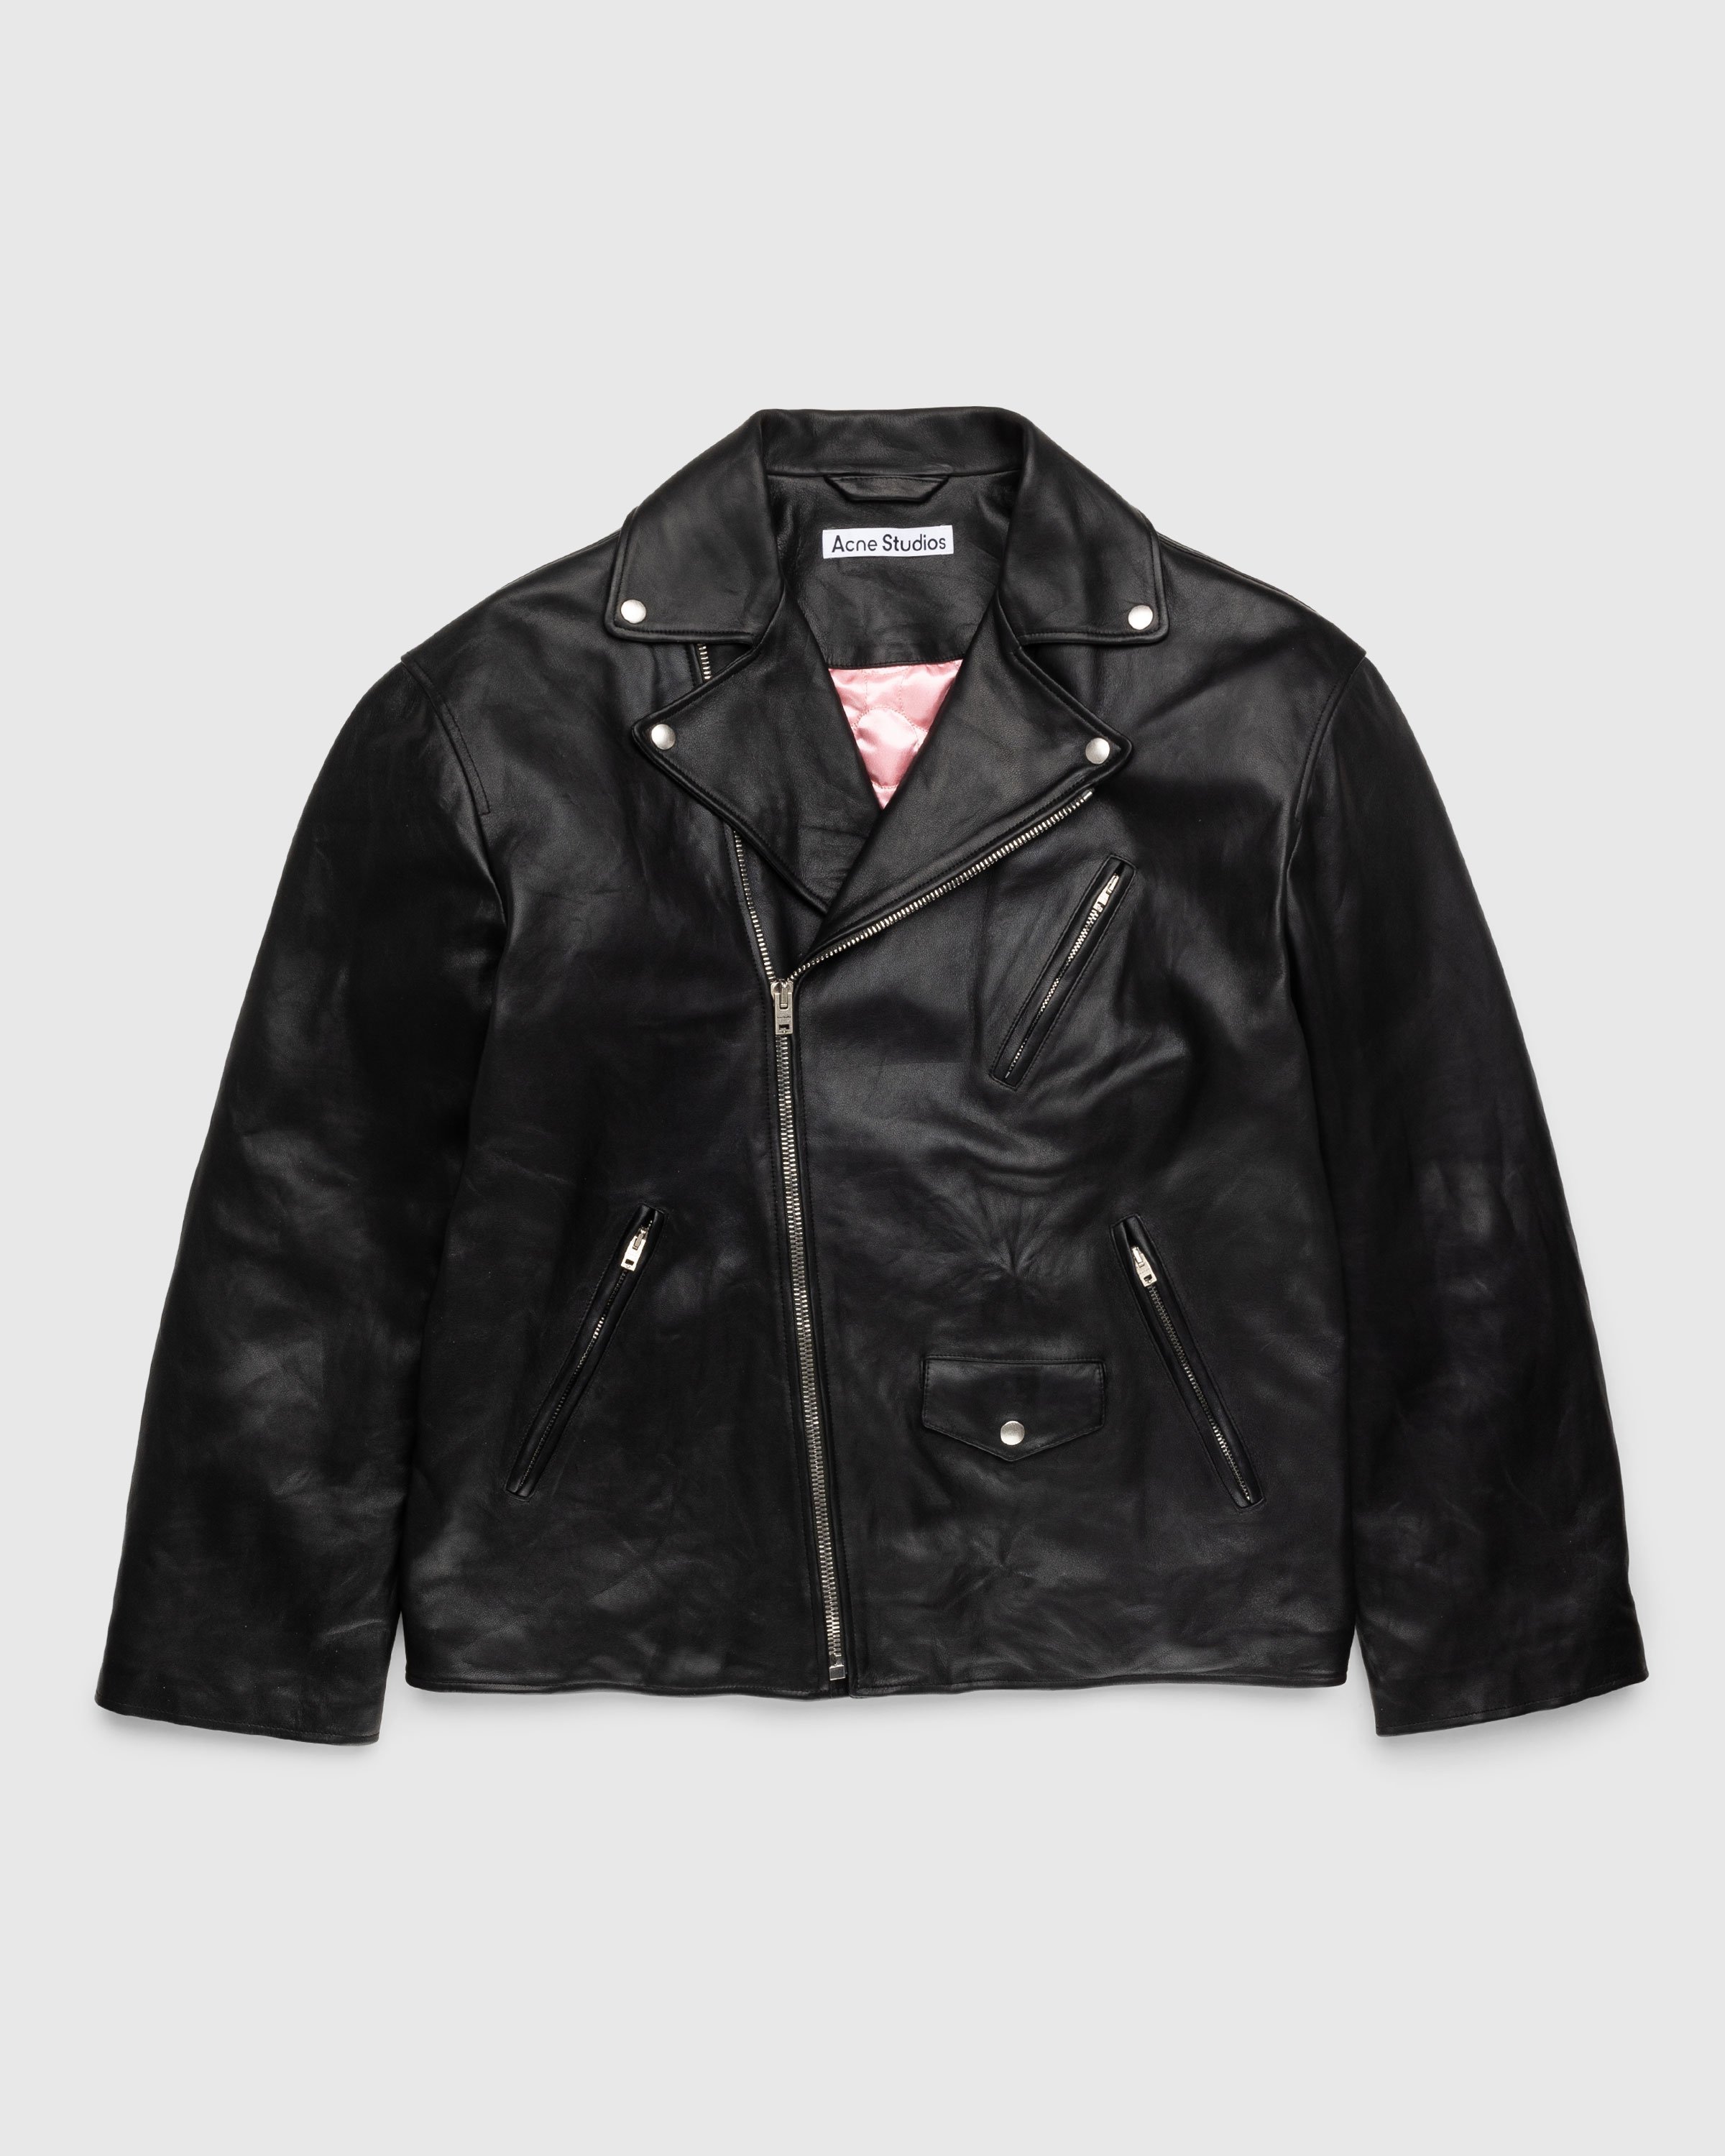 Acne Studios - Distressed Leather Jacket Black - Clothing - Black - Image 1